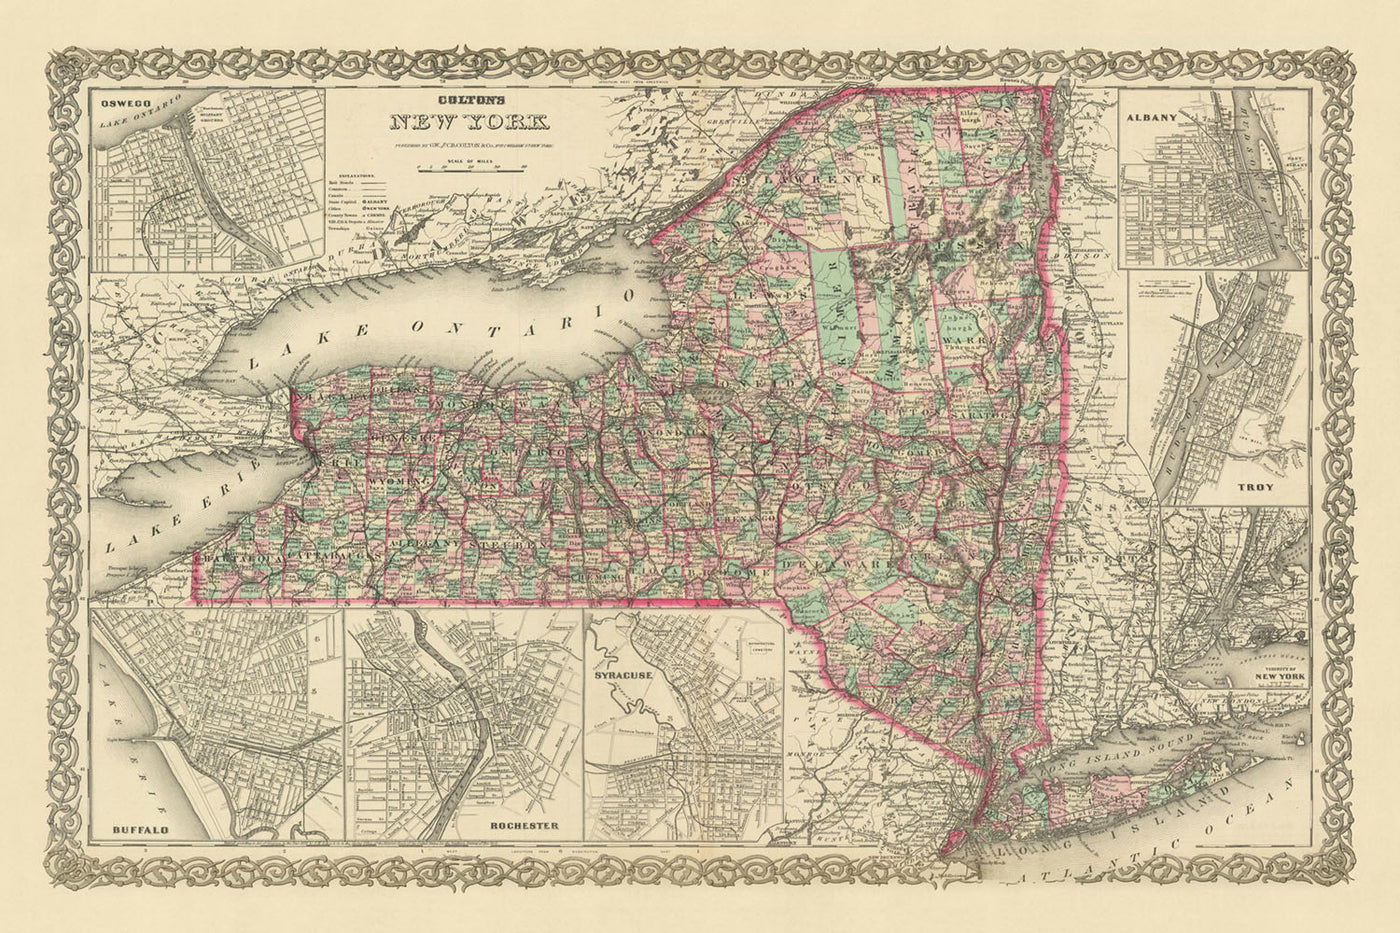 Ancienne carte de New York par JH Colton, 1874 : New York, Buffalo, Rochester, Albany, Syracuse